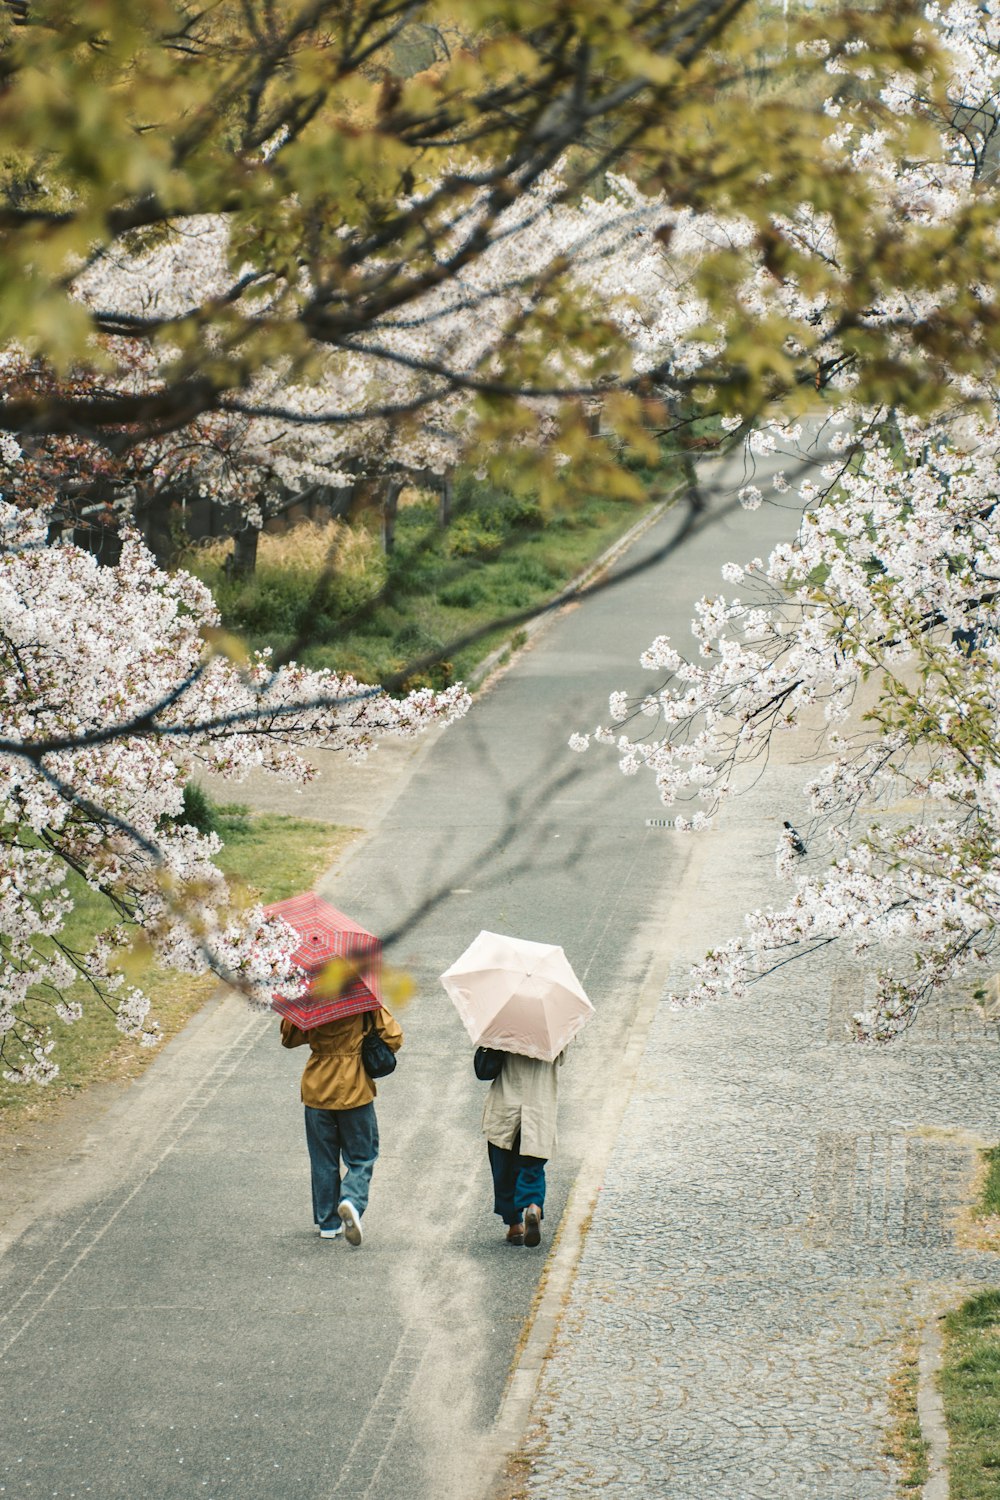 two people walking on road